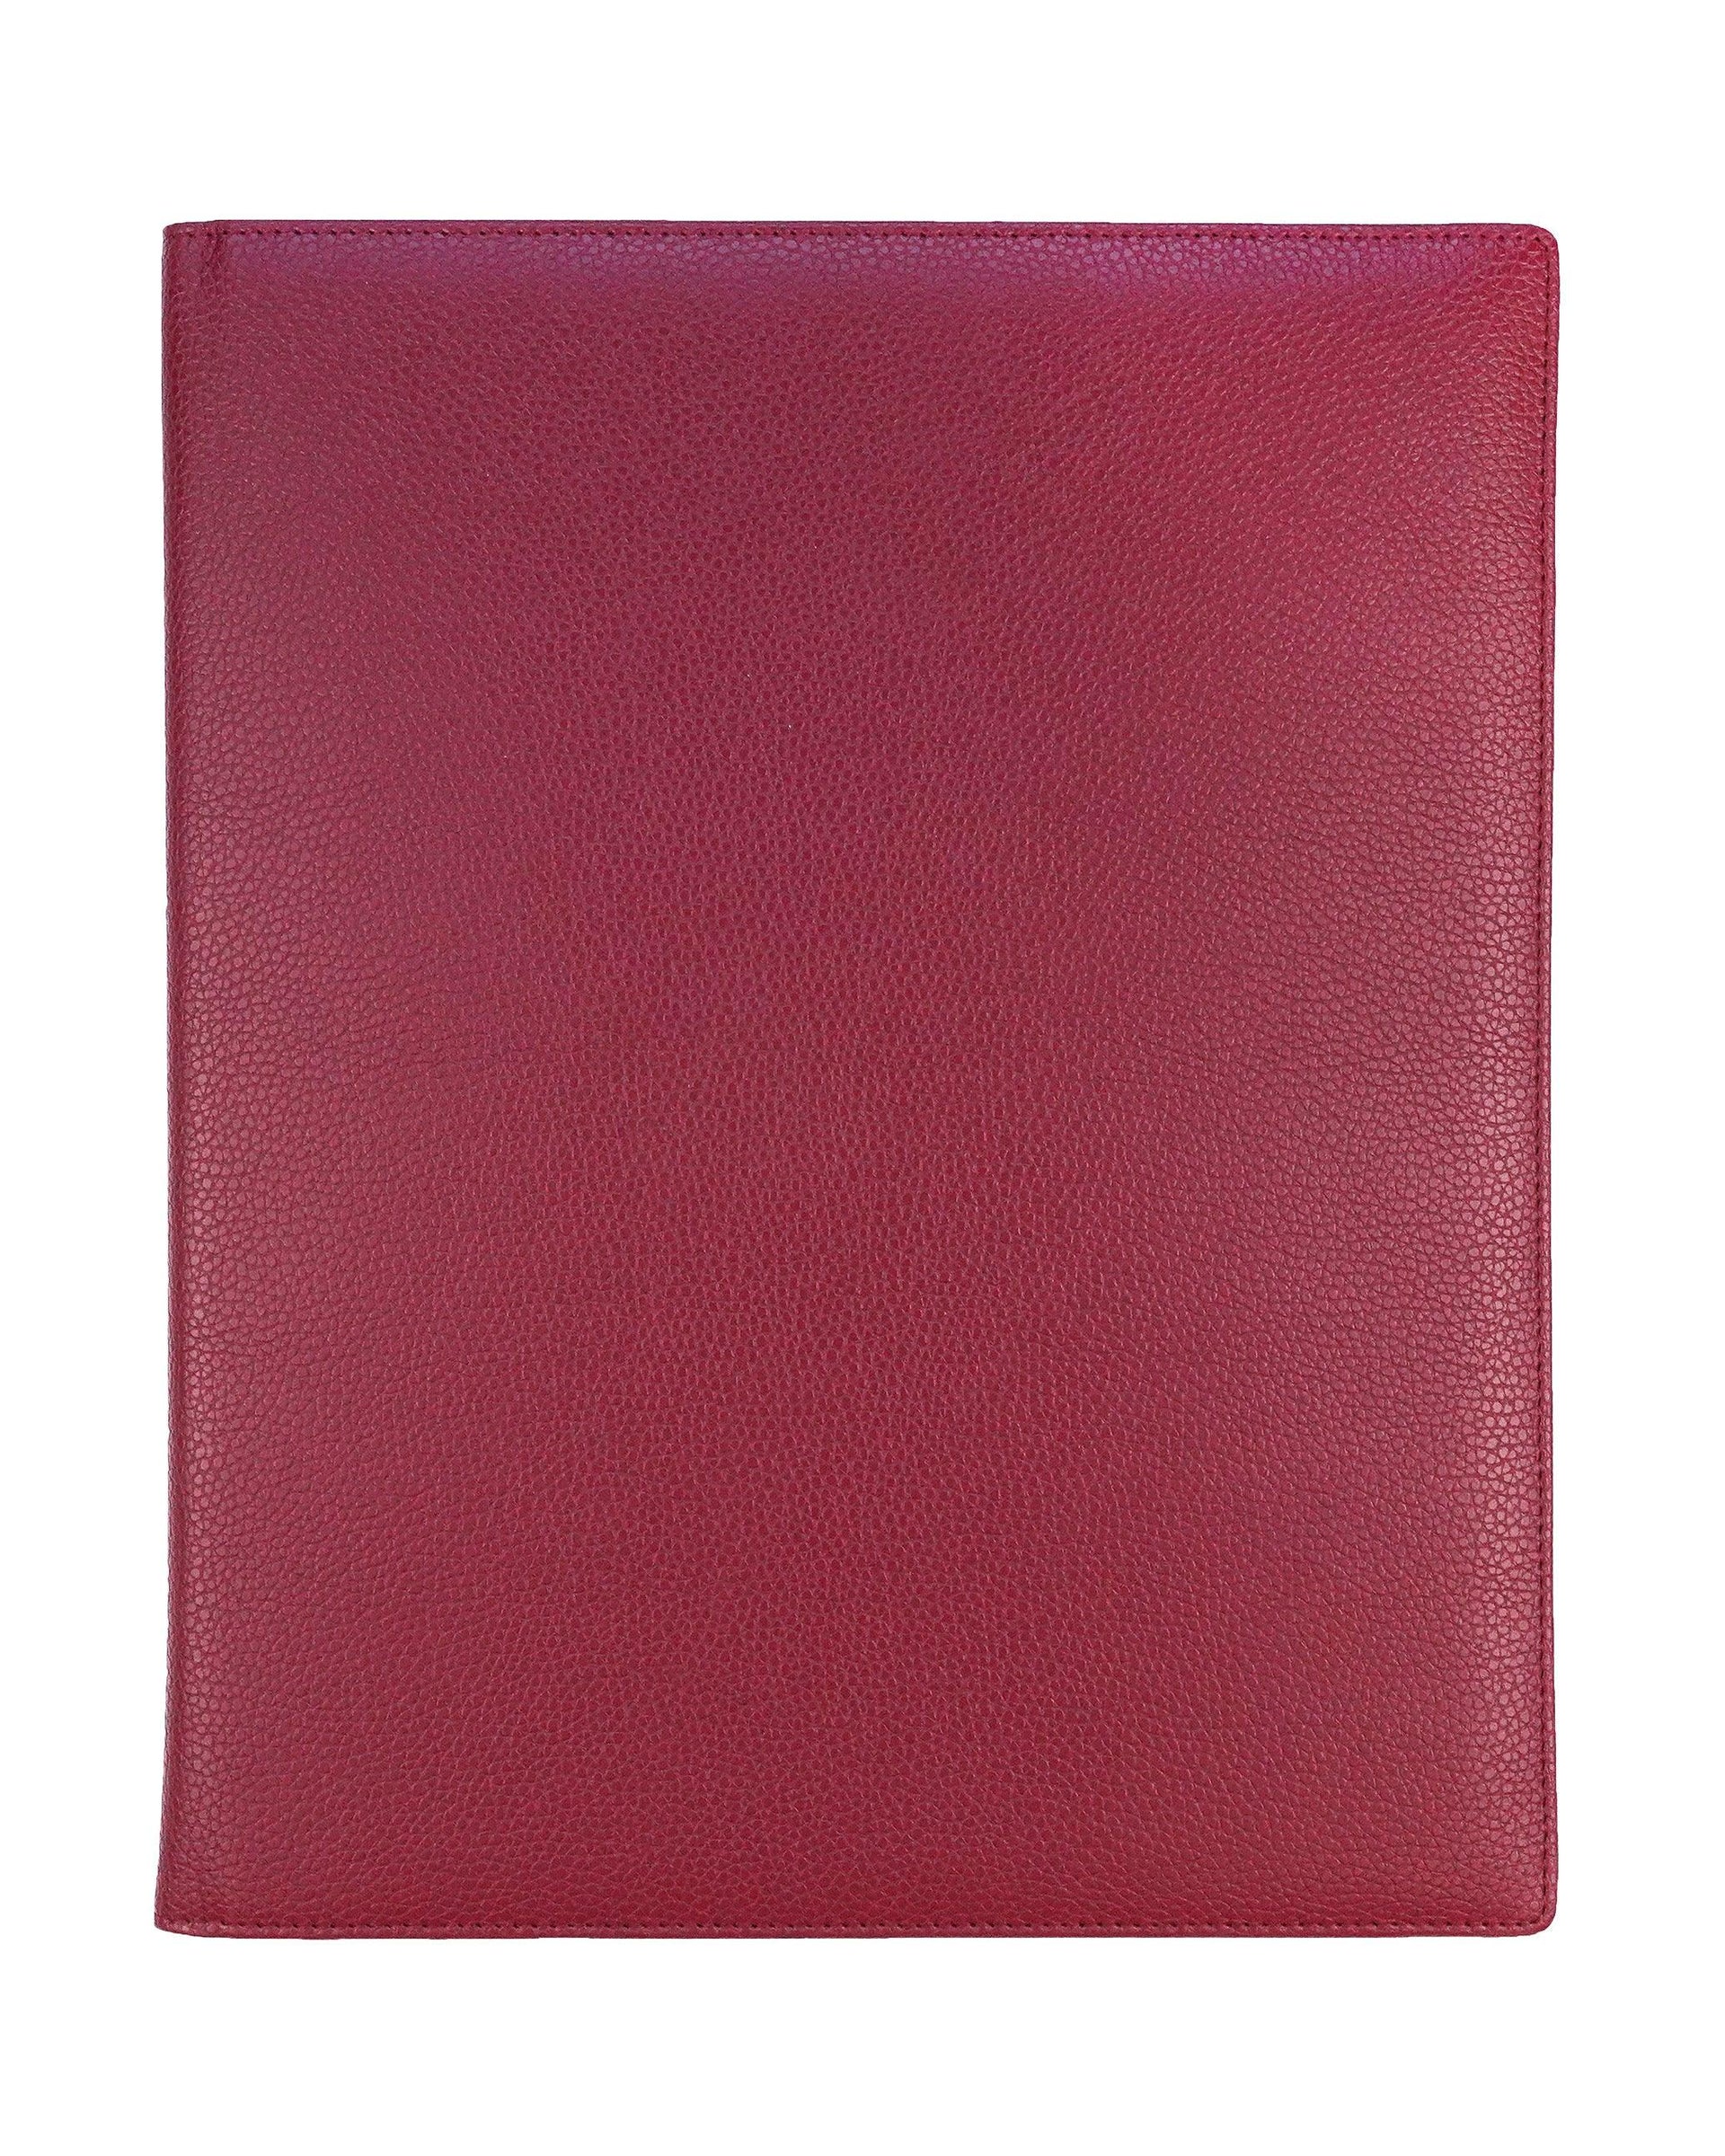 Leather Folio Folder | Wine Vegan Leather - Jane's Agenda®